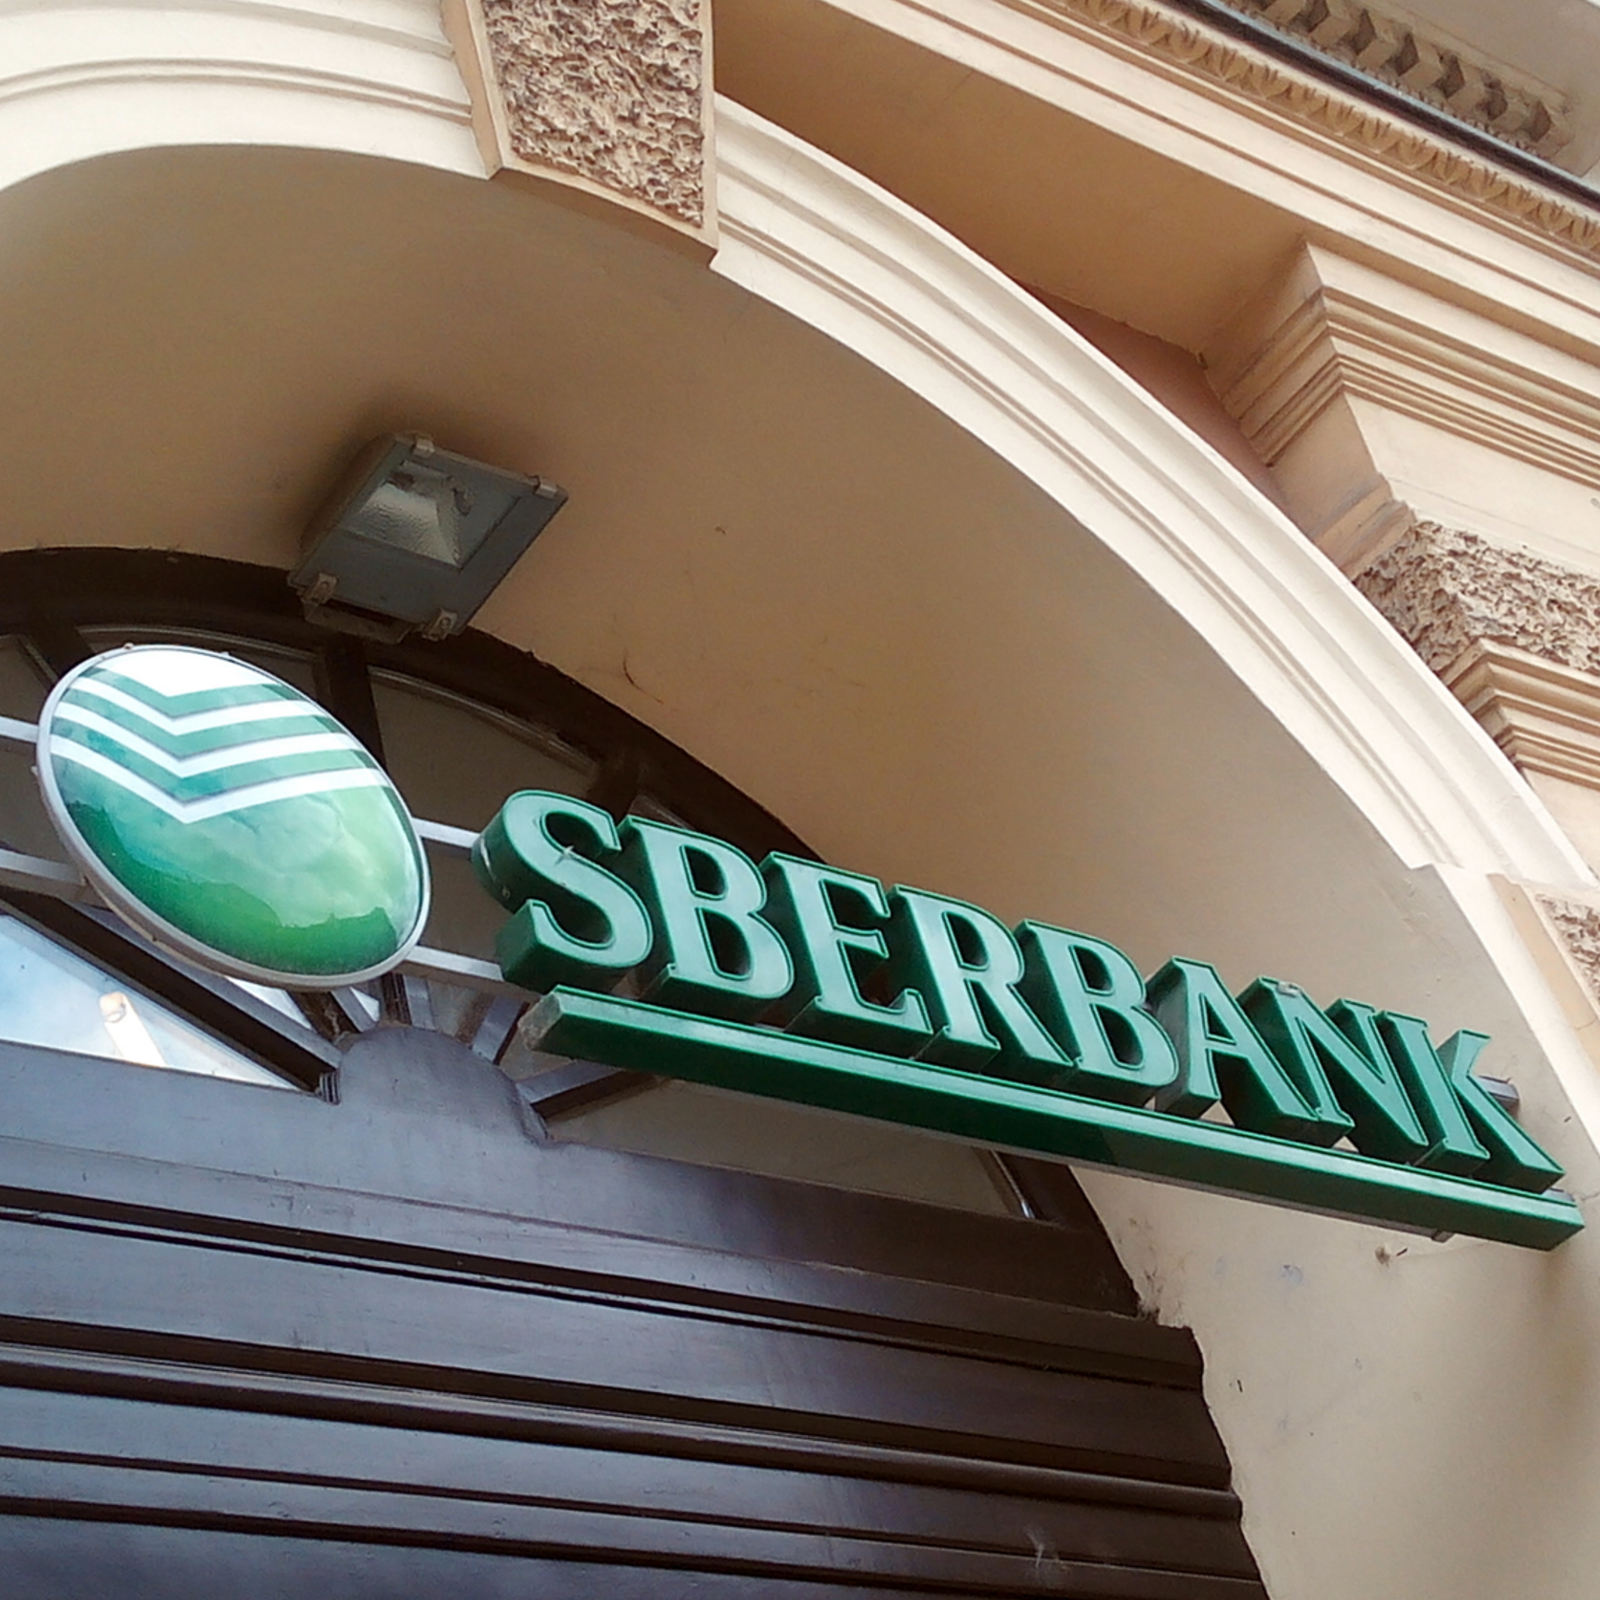 Sberbank me. Сбербанк. Банки Сбербанк. Сбербанк логотип. Сберегательные банки России.